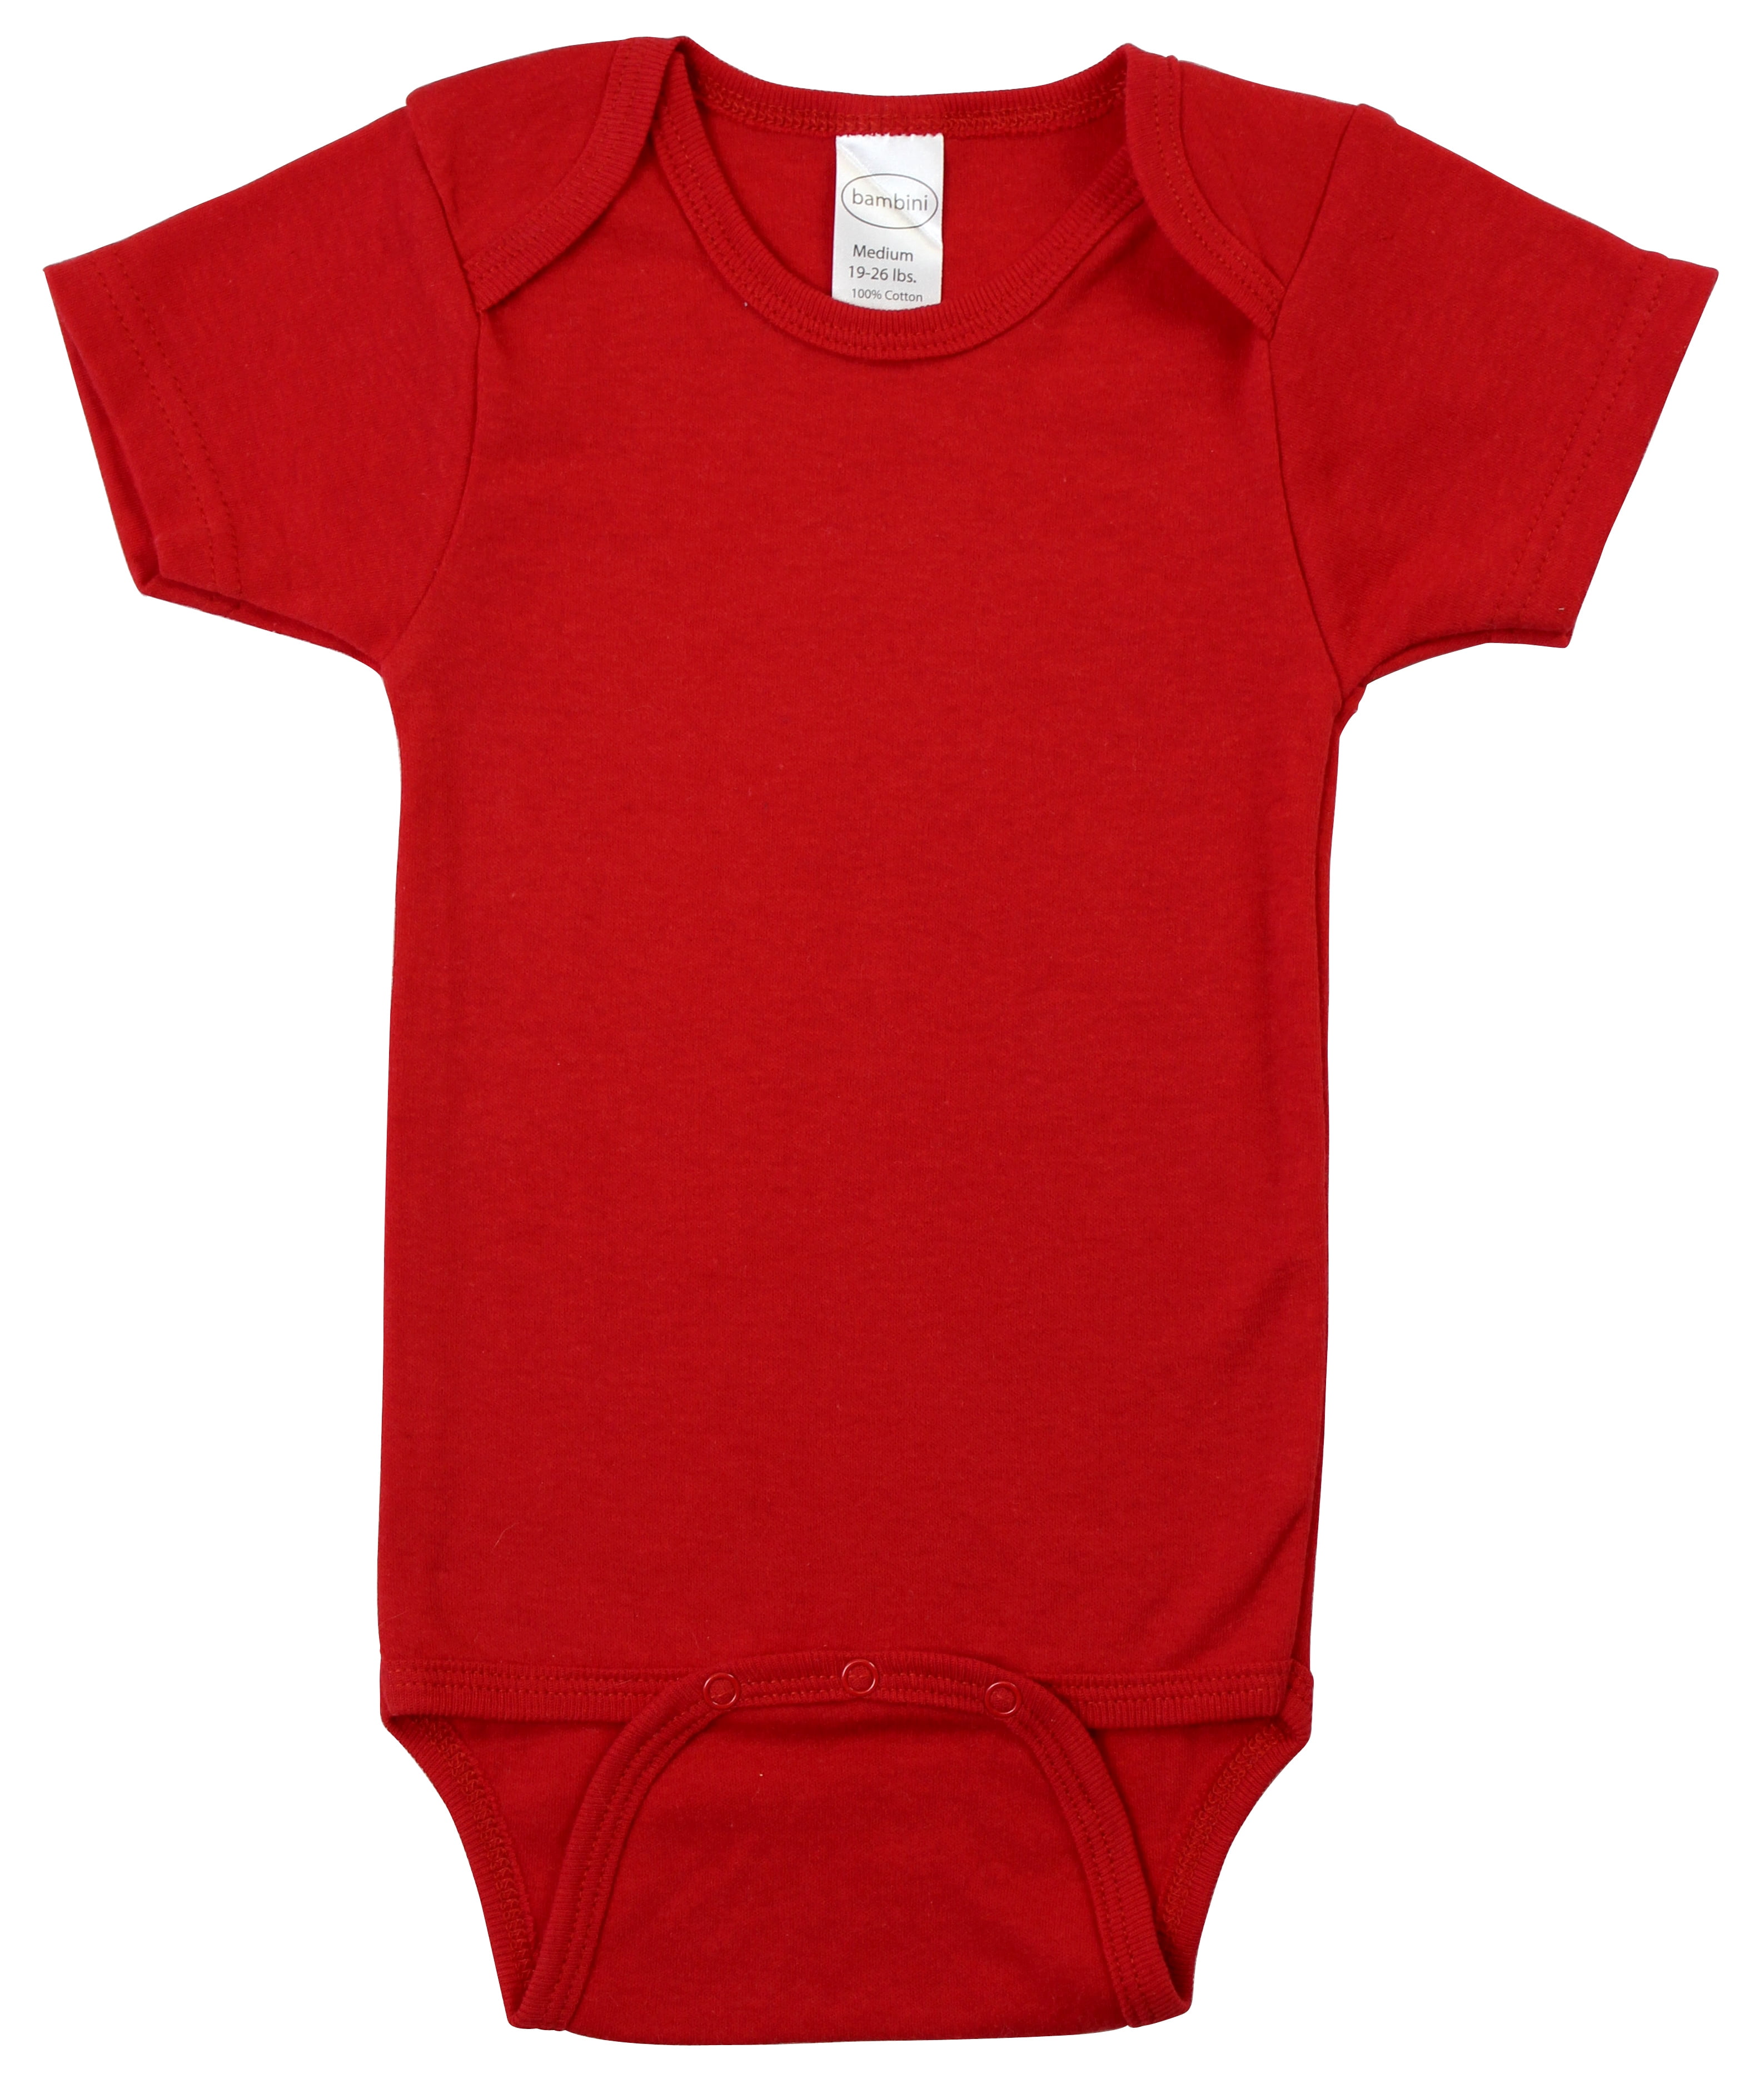 Ls-0146 Interlock Short Sleeve Bodysuit, Red - Small